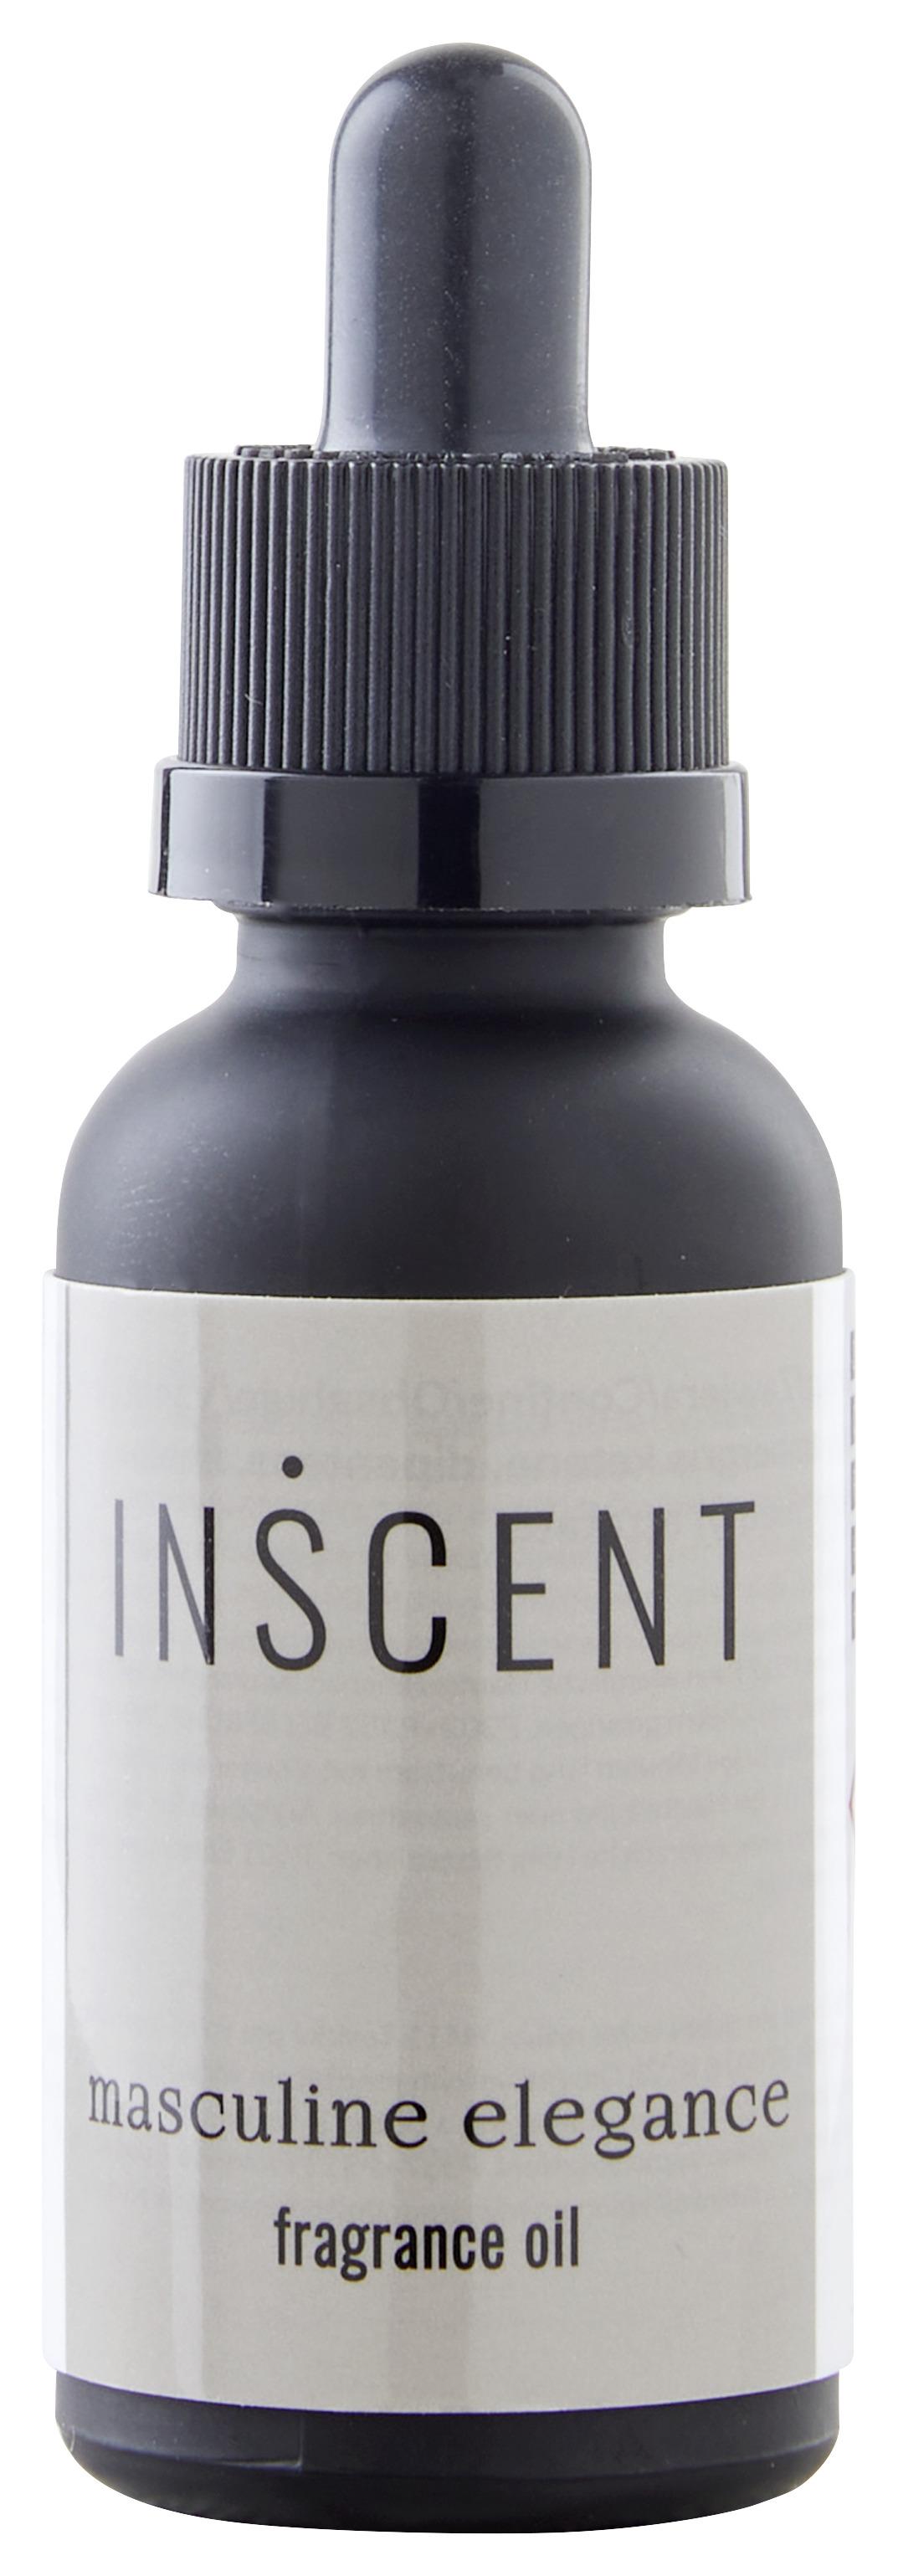 Parfémovaný Olej Masculine Elegance, 30ml - šedá/černá, Design, sklo (30ml) - Inscent